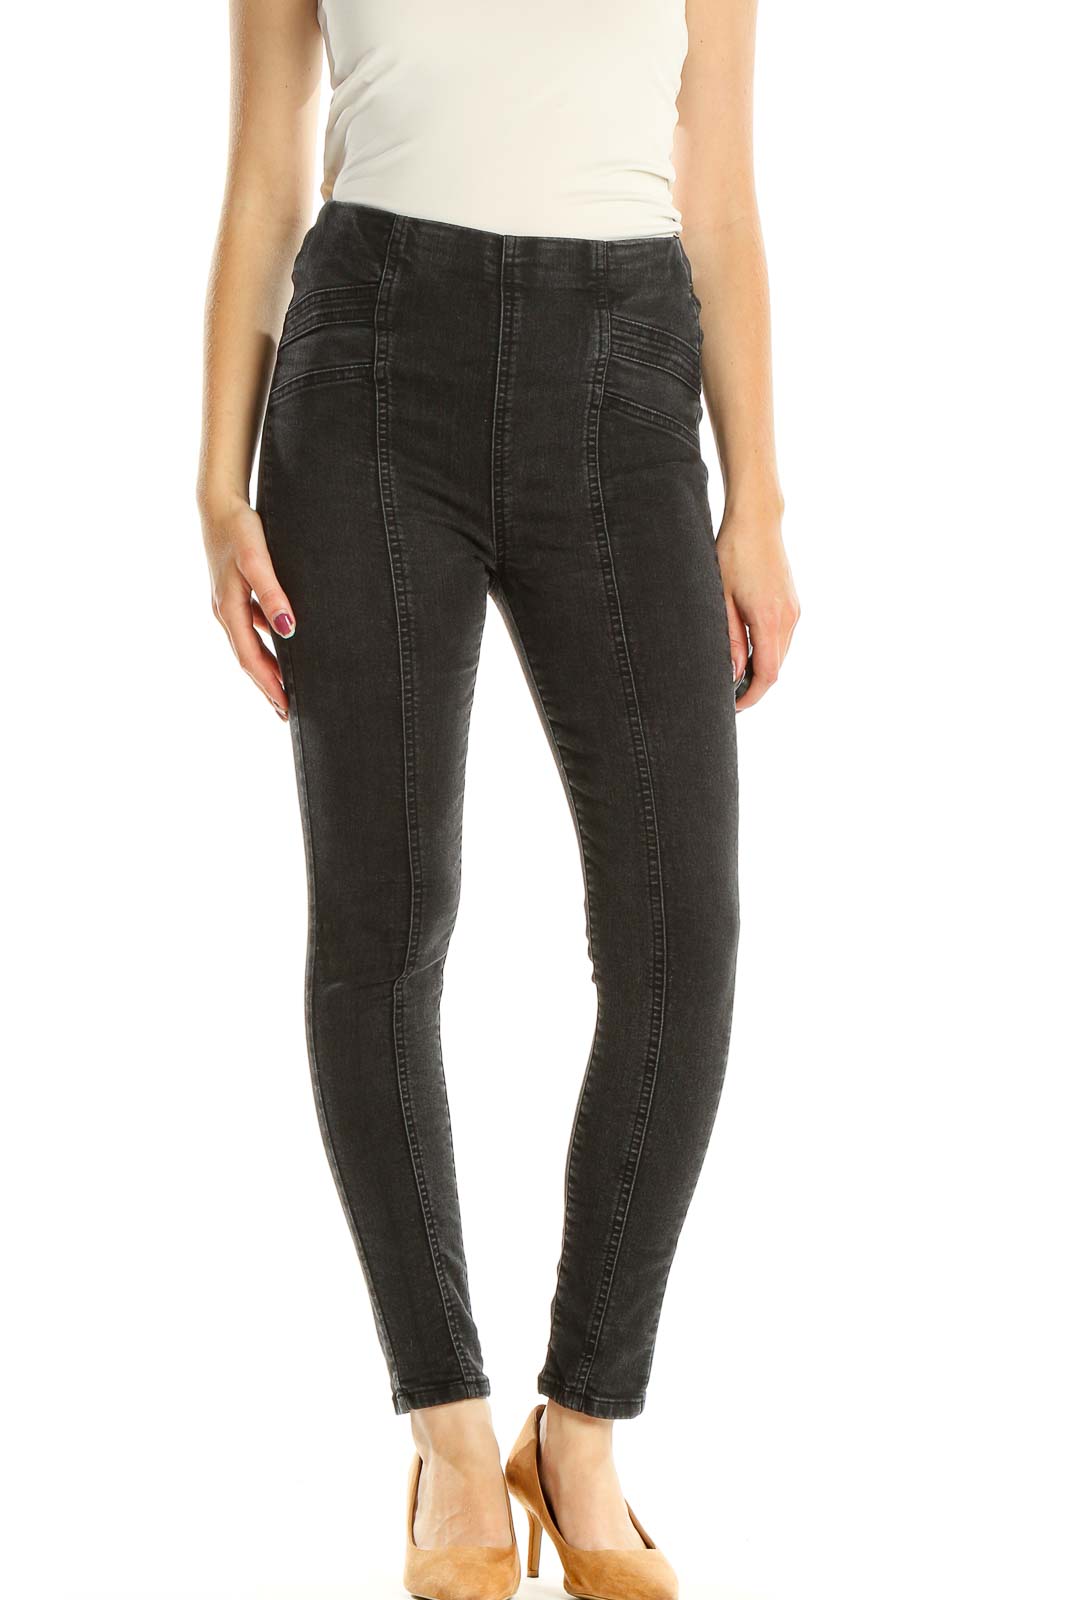 Black Gray Skinny Jeans Front